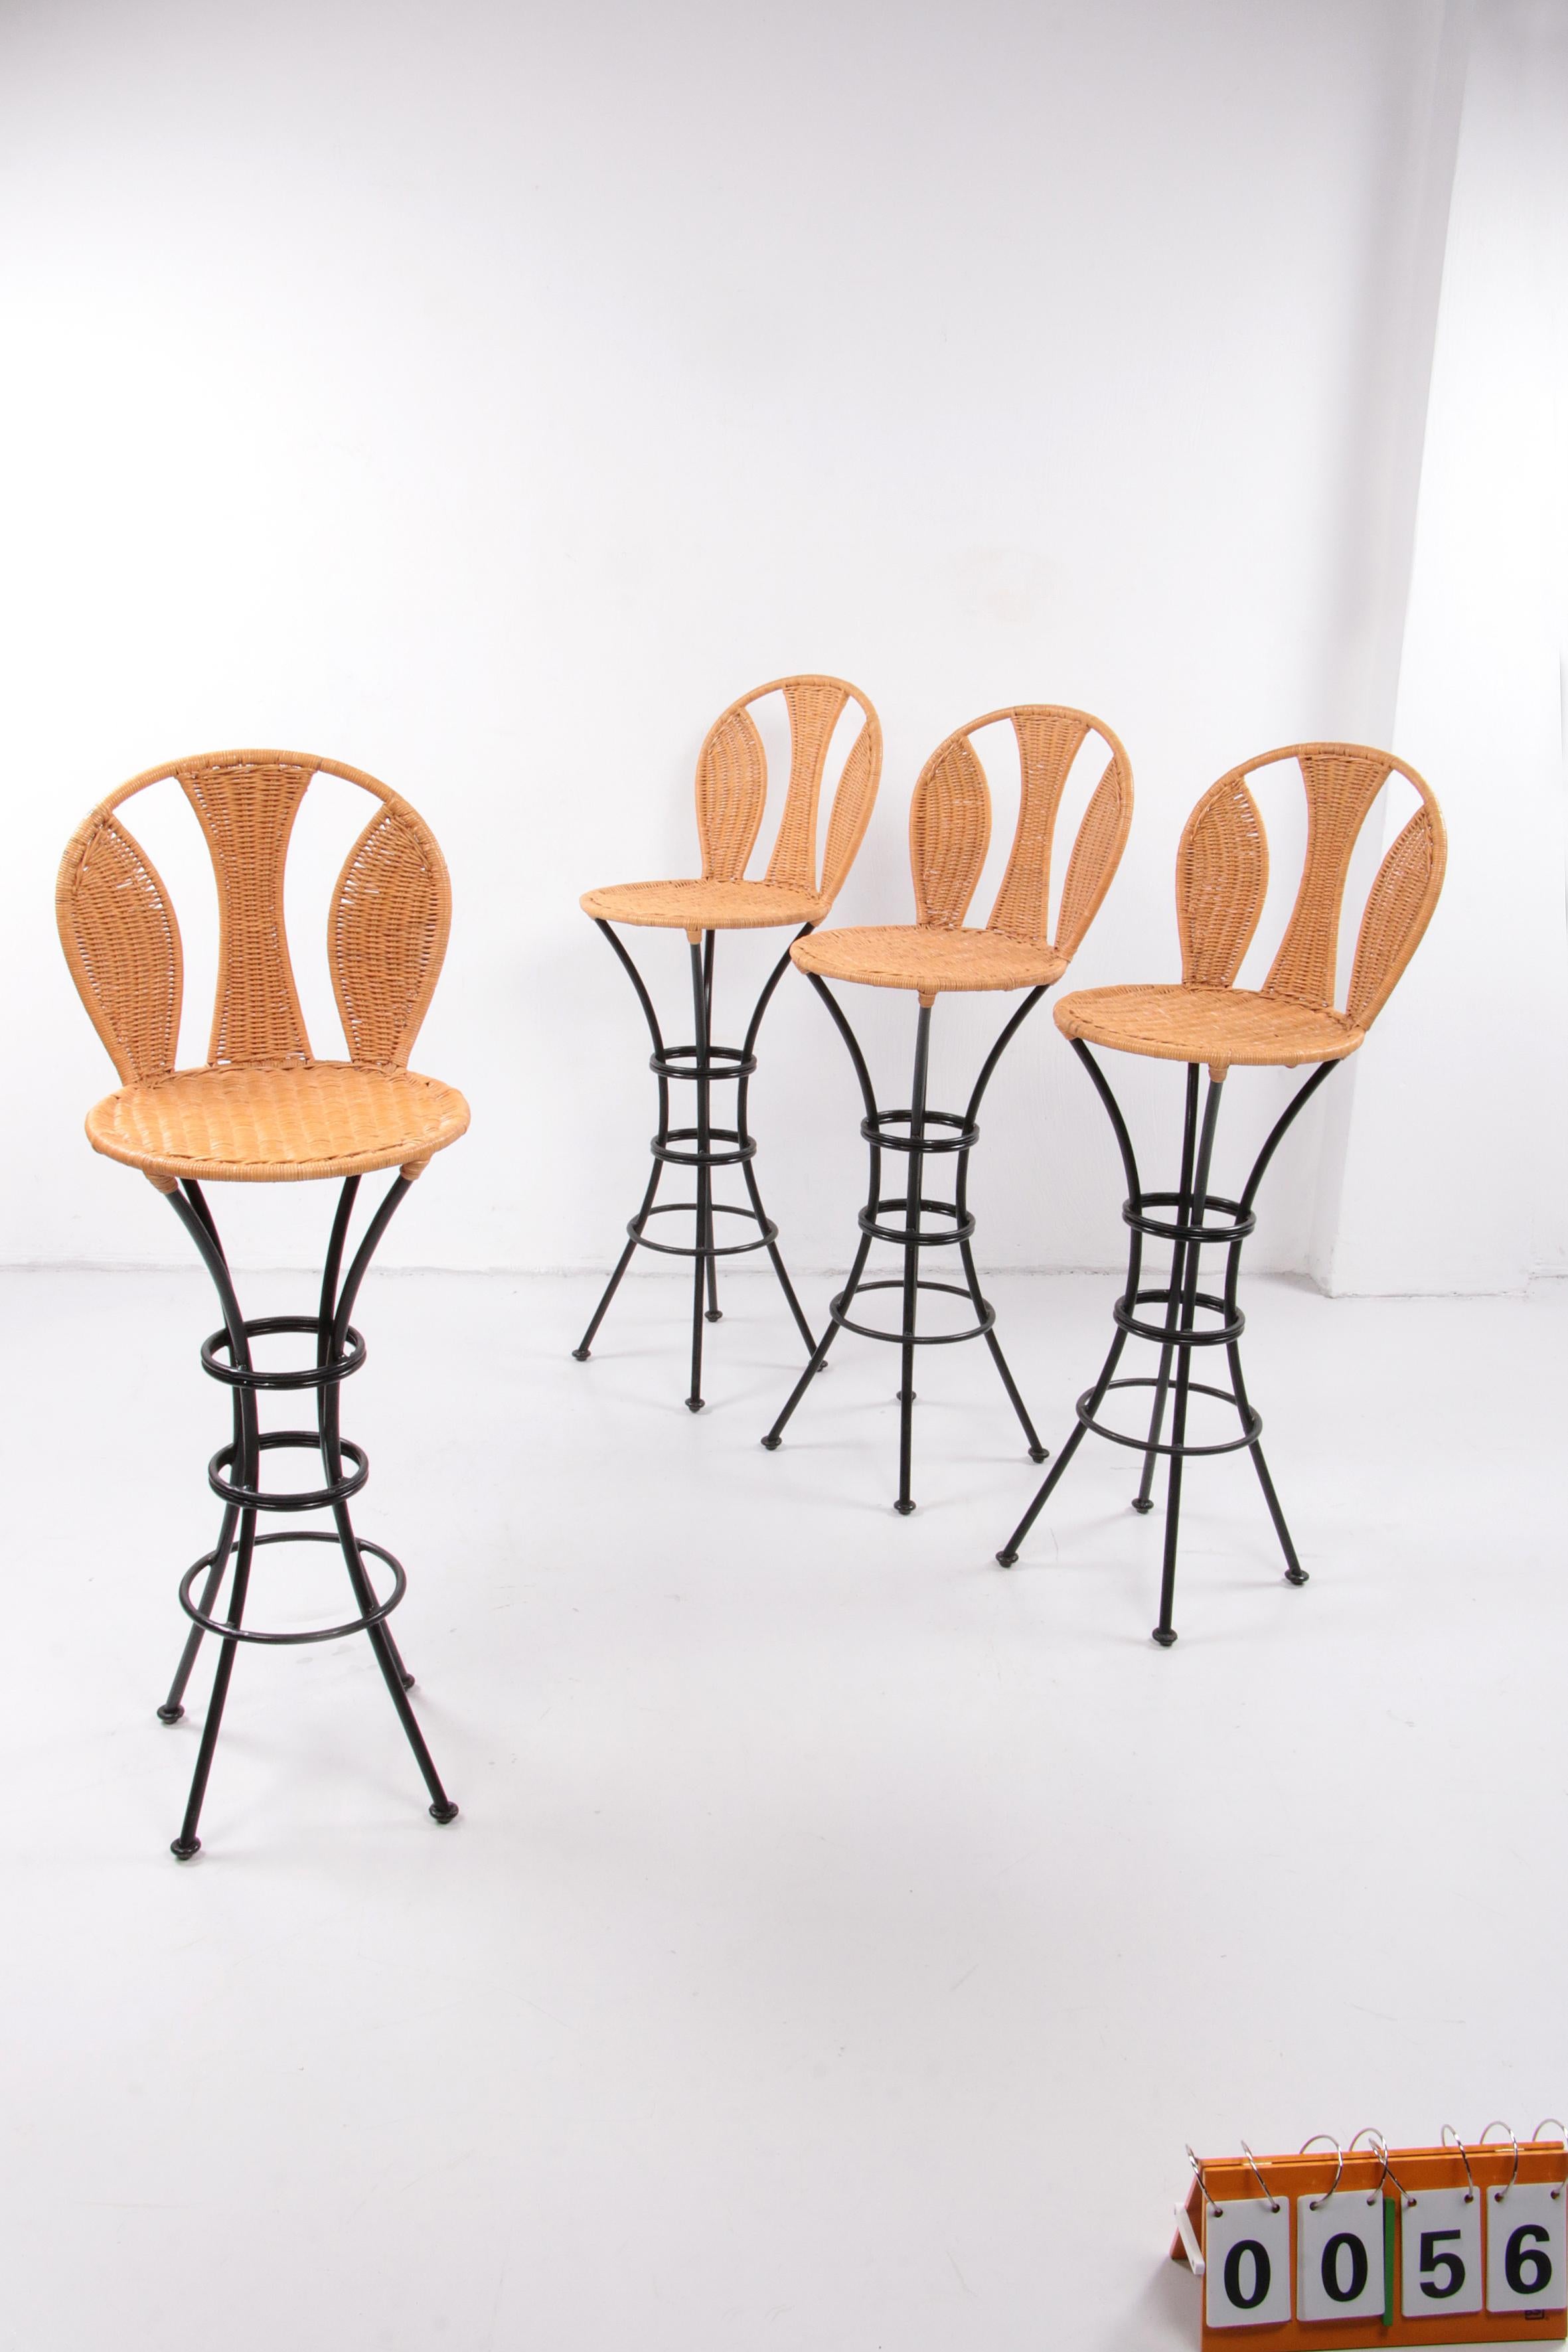 Set of 4 Italian bar stools from the 1970s. 8